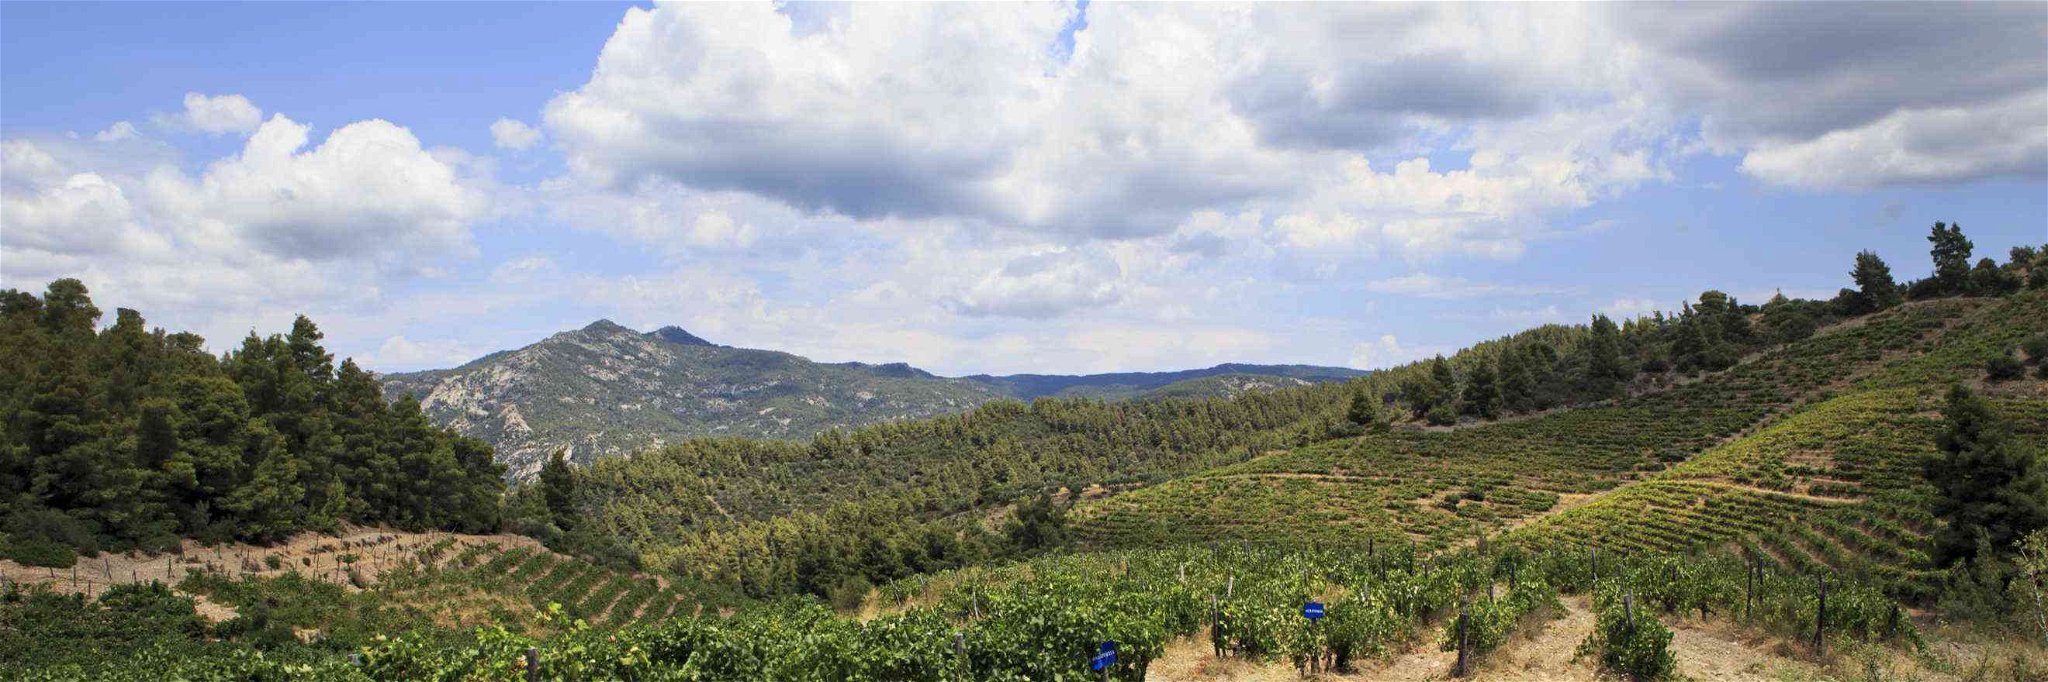 Not a beach umbrella in sight: Mountainous vineyards in northern Greece.&nbsp;